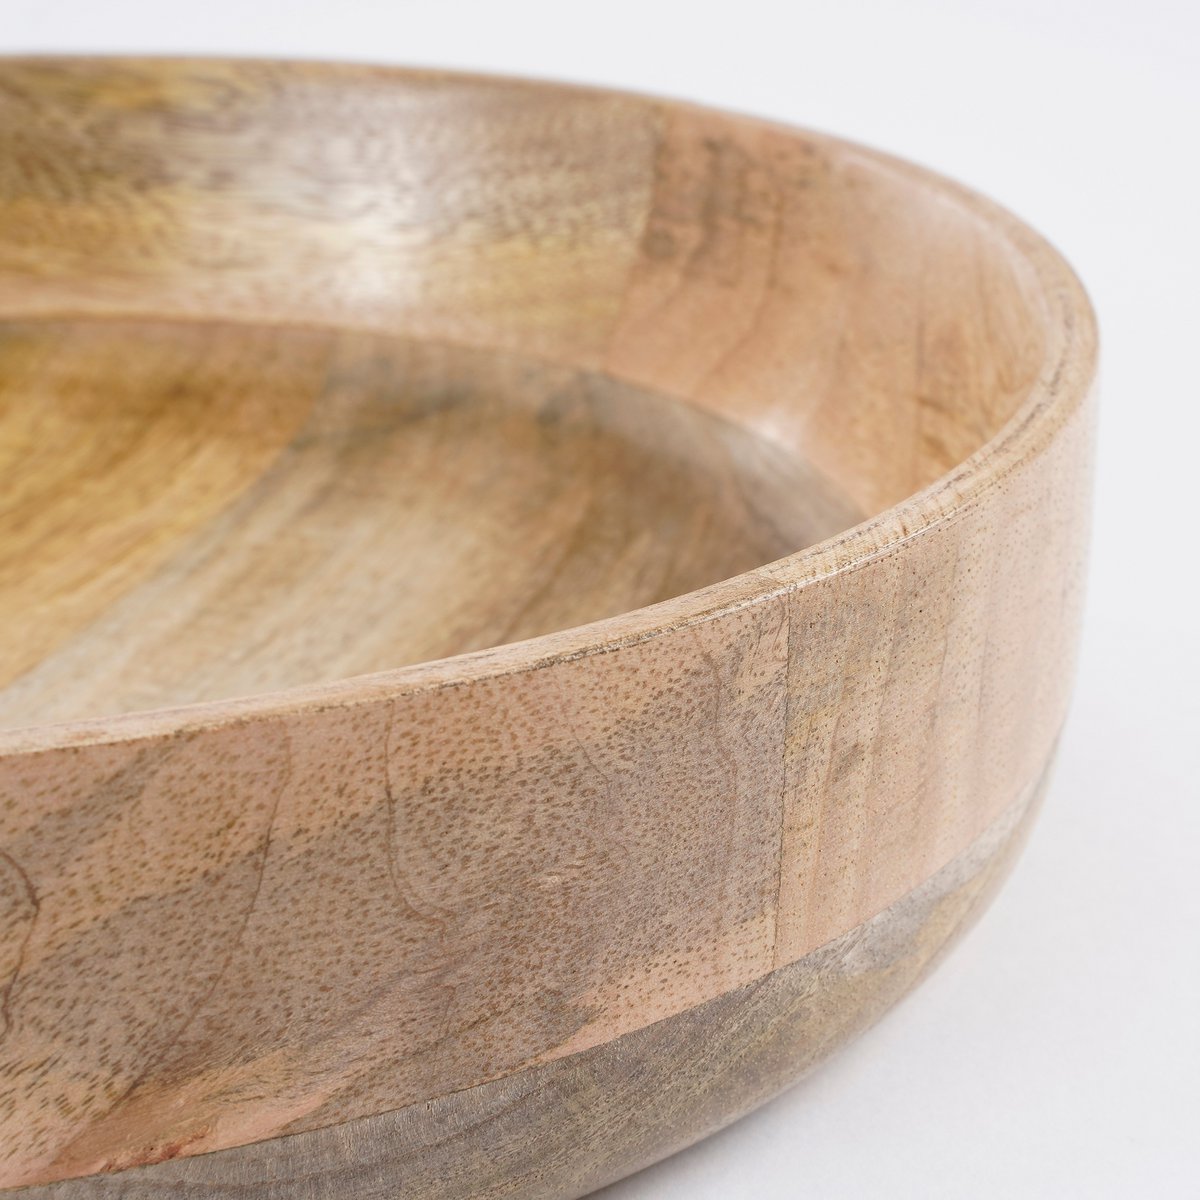 Tomar bowl made of 100% FSC mango wood - H4.5 x Ø20 cm